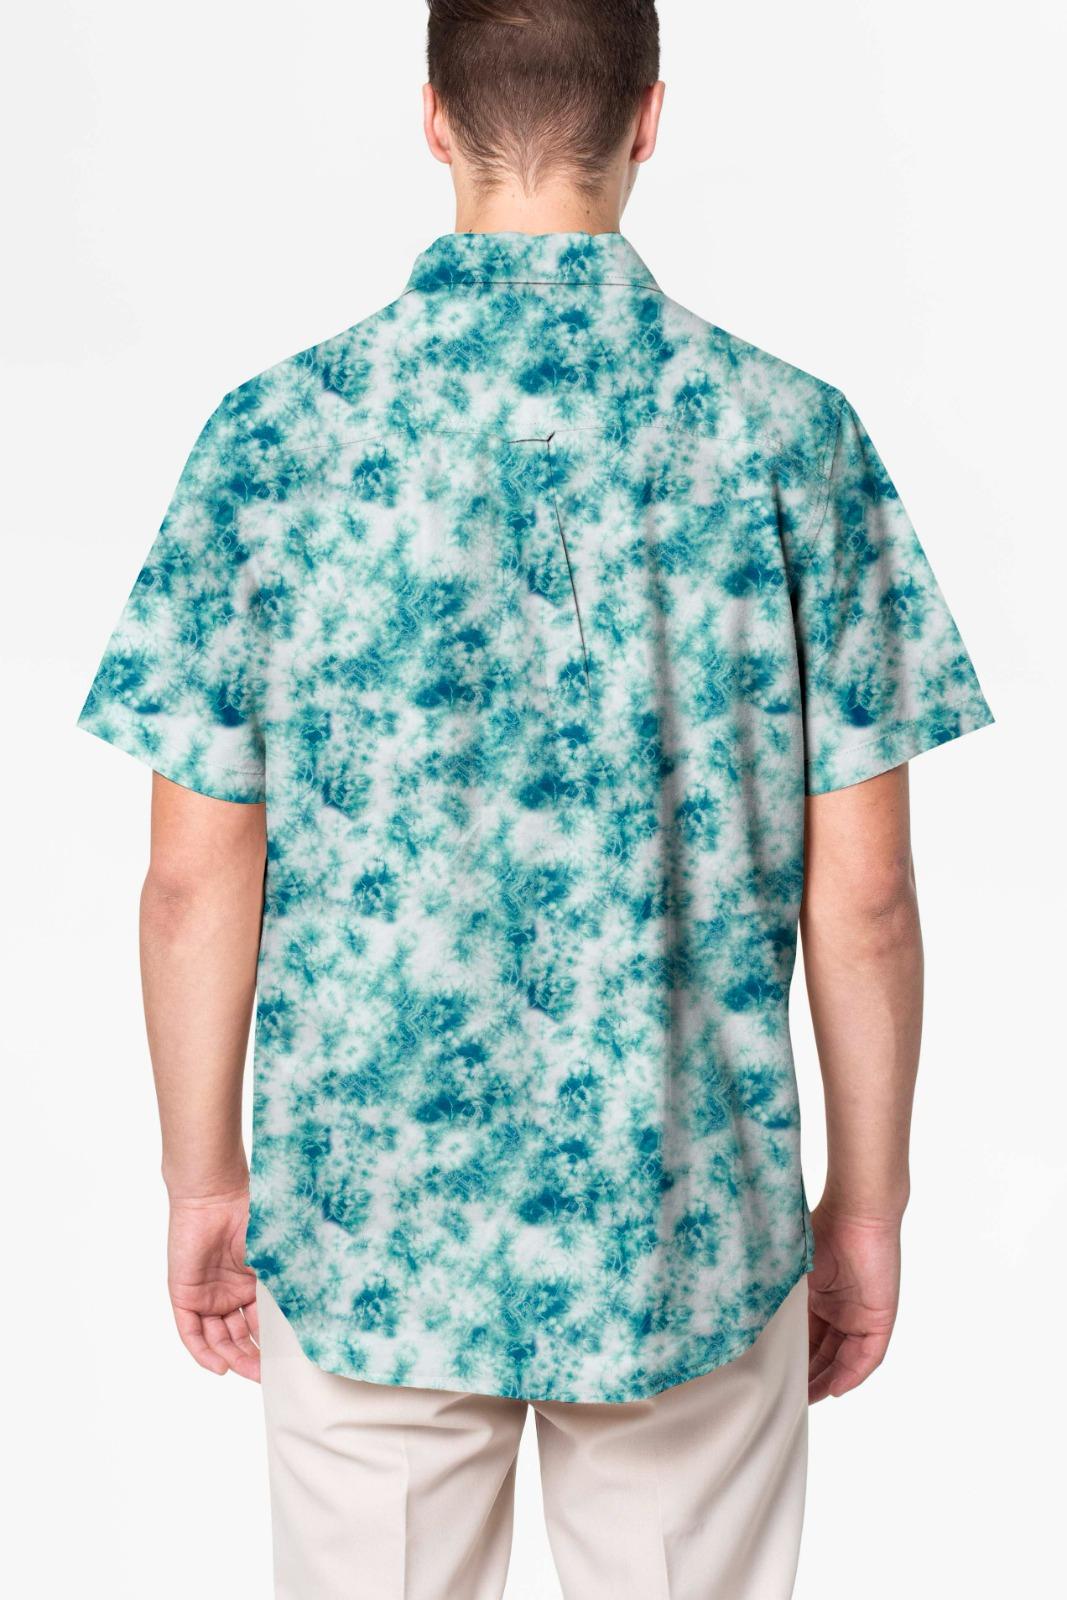 Men's Printed Casual Shirts - Blossom Mantra